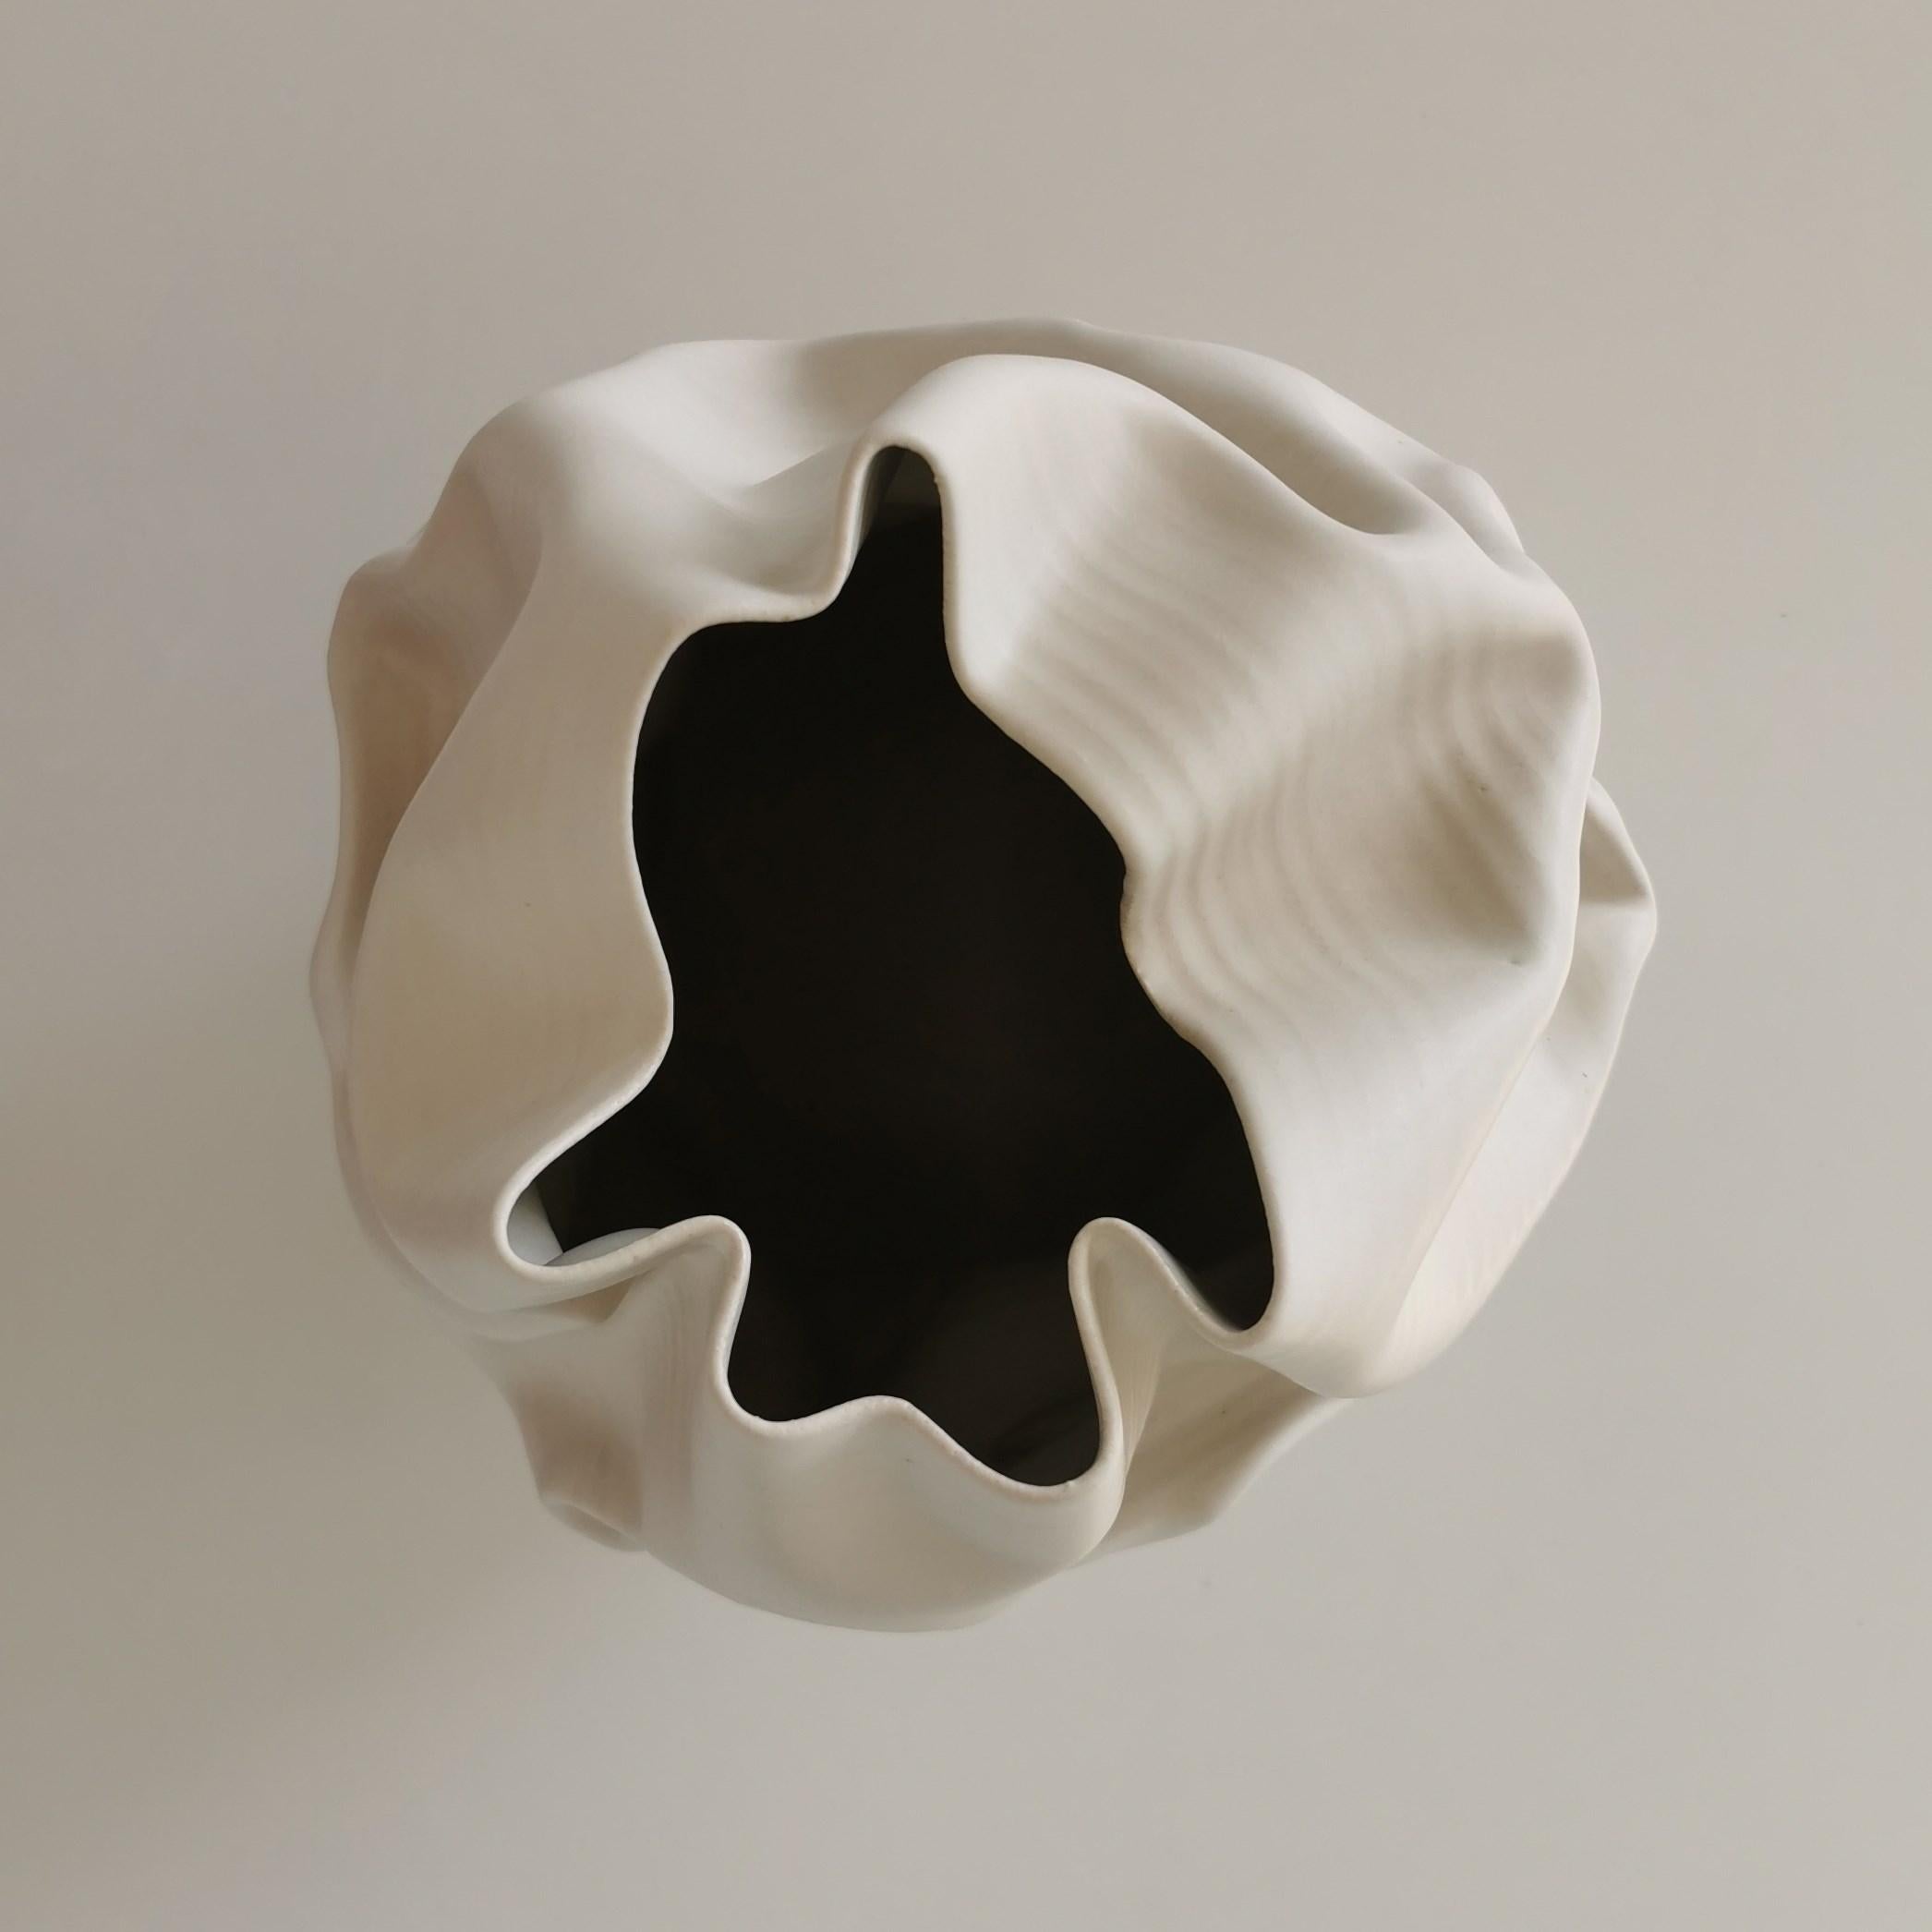 Undulating Crumpled Form No 51, a Ceramic Vessel by Nicholas Arroyave-Portela 10